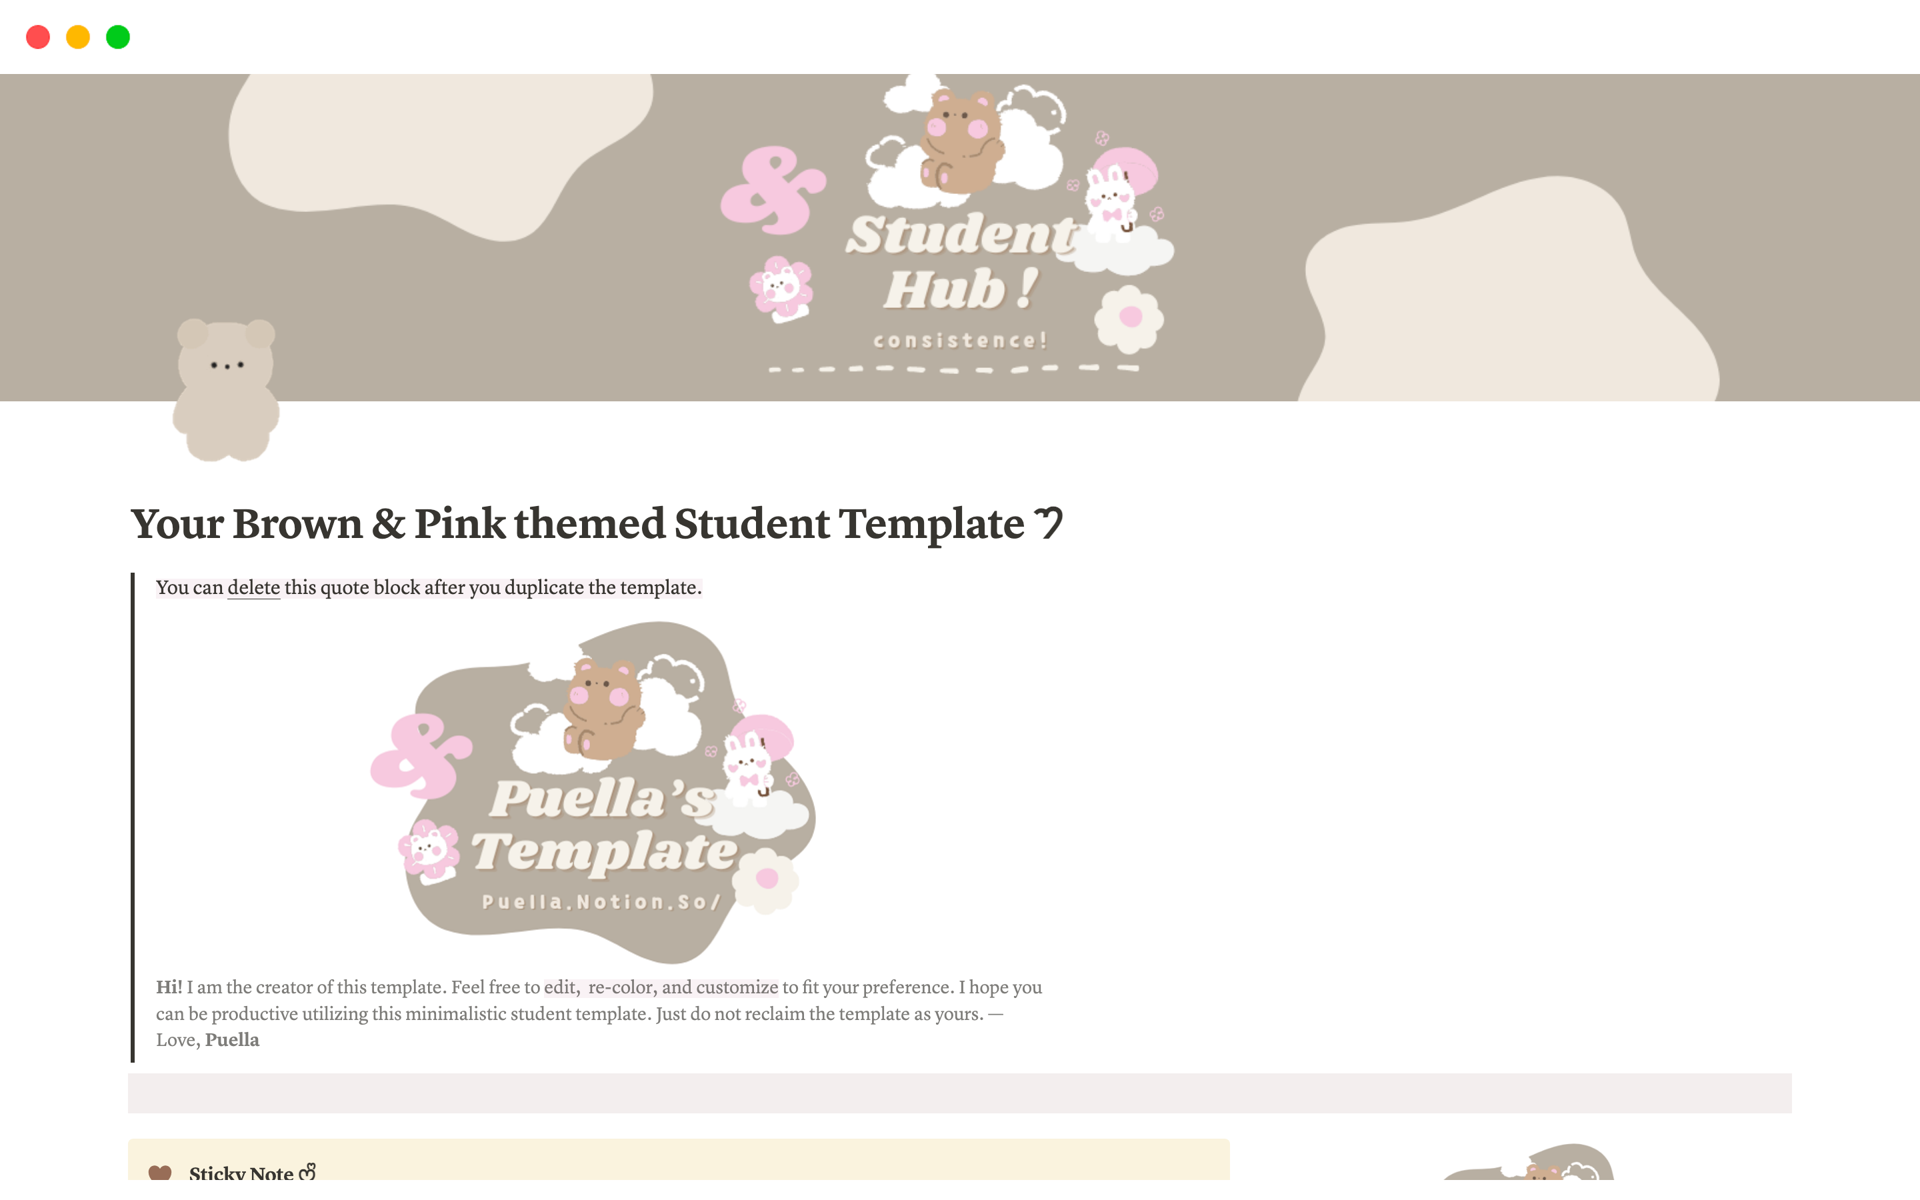 Vista previa de una plantilla para Brown & Pink themed Student Template